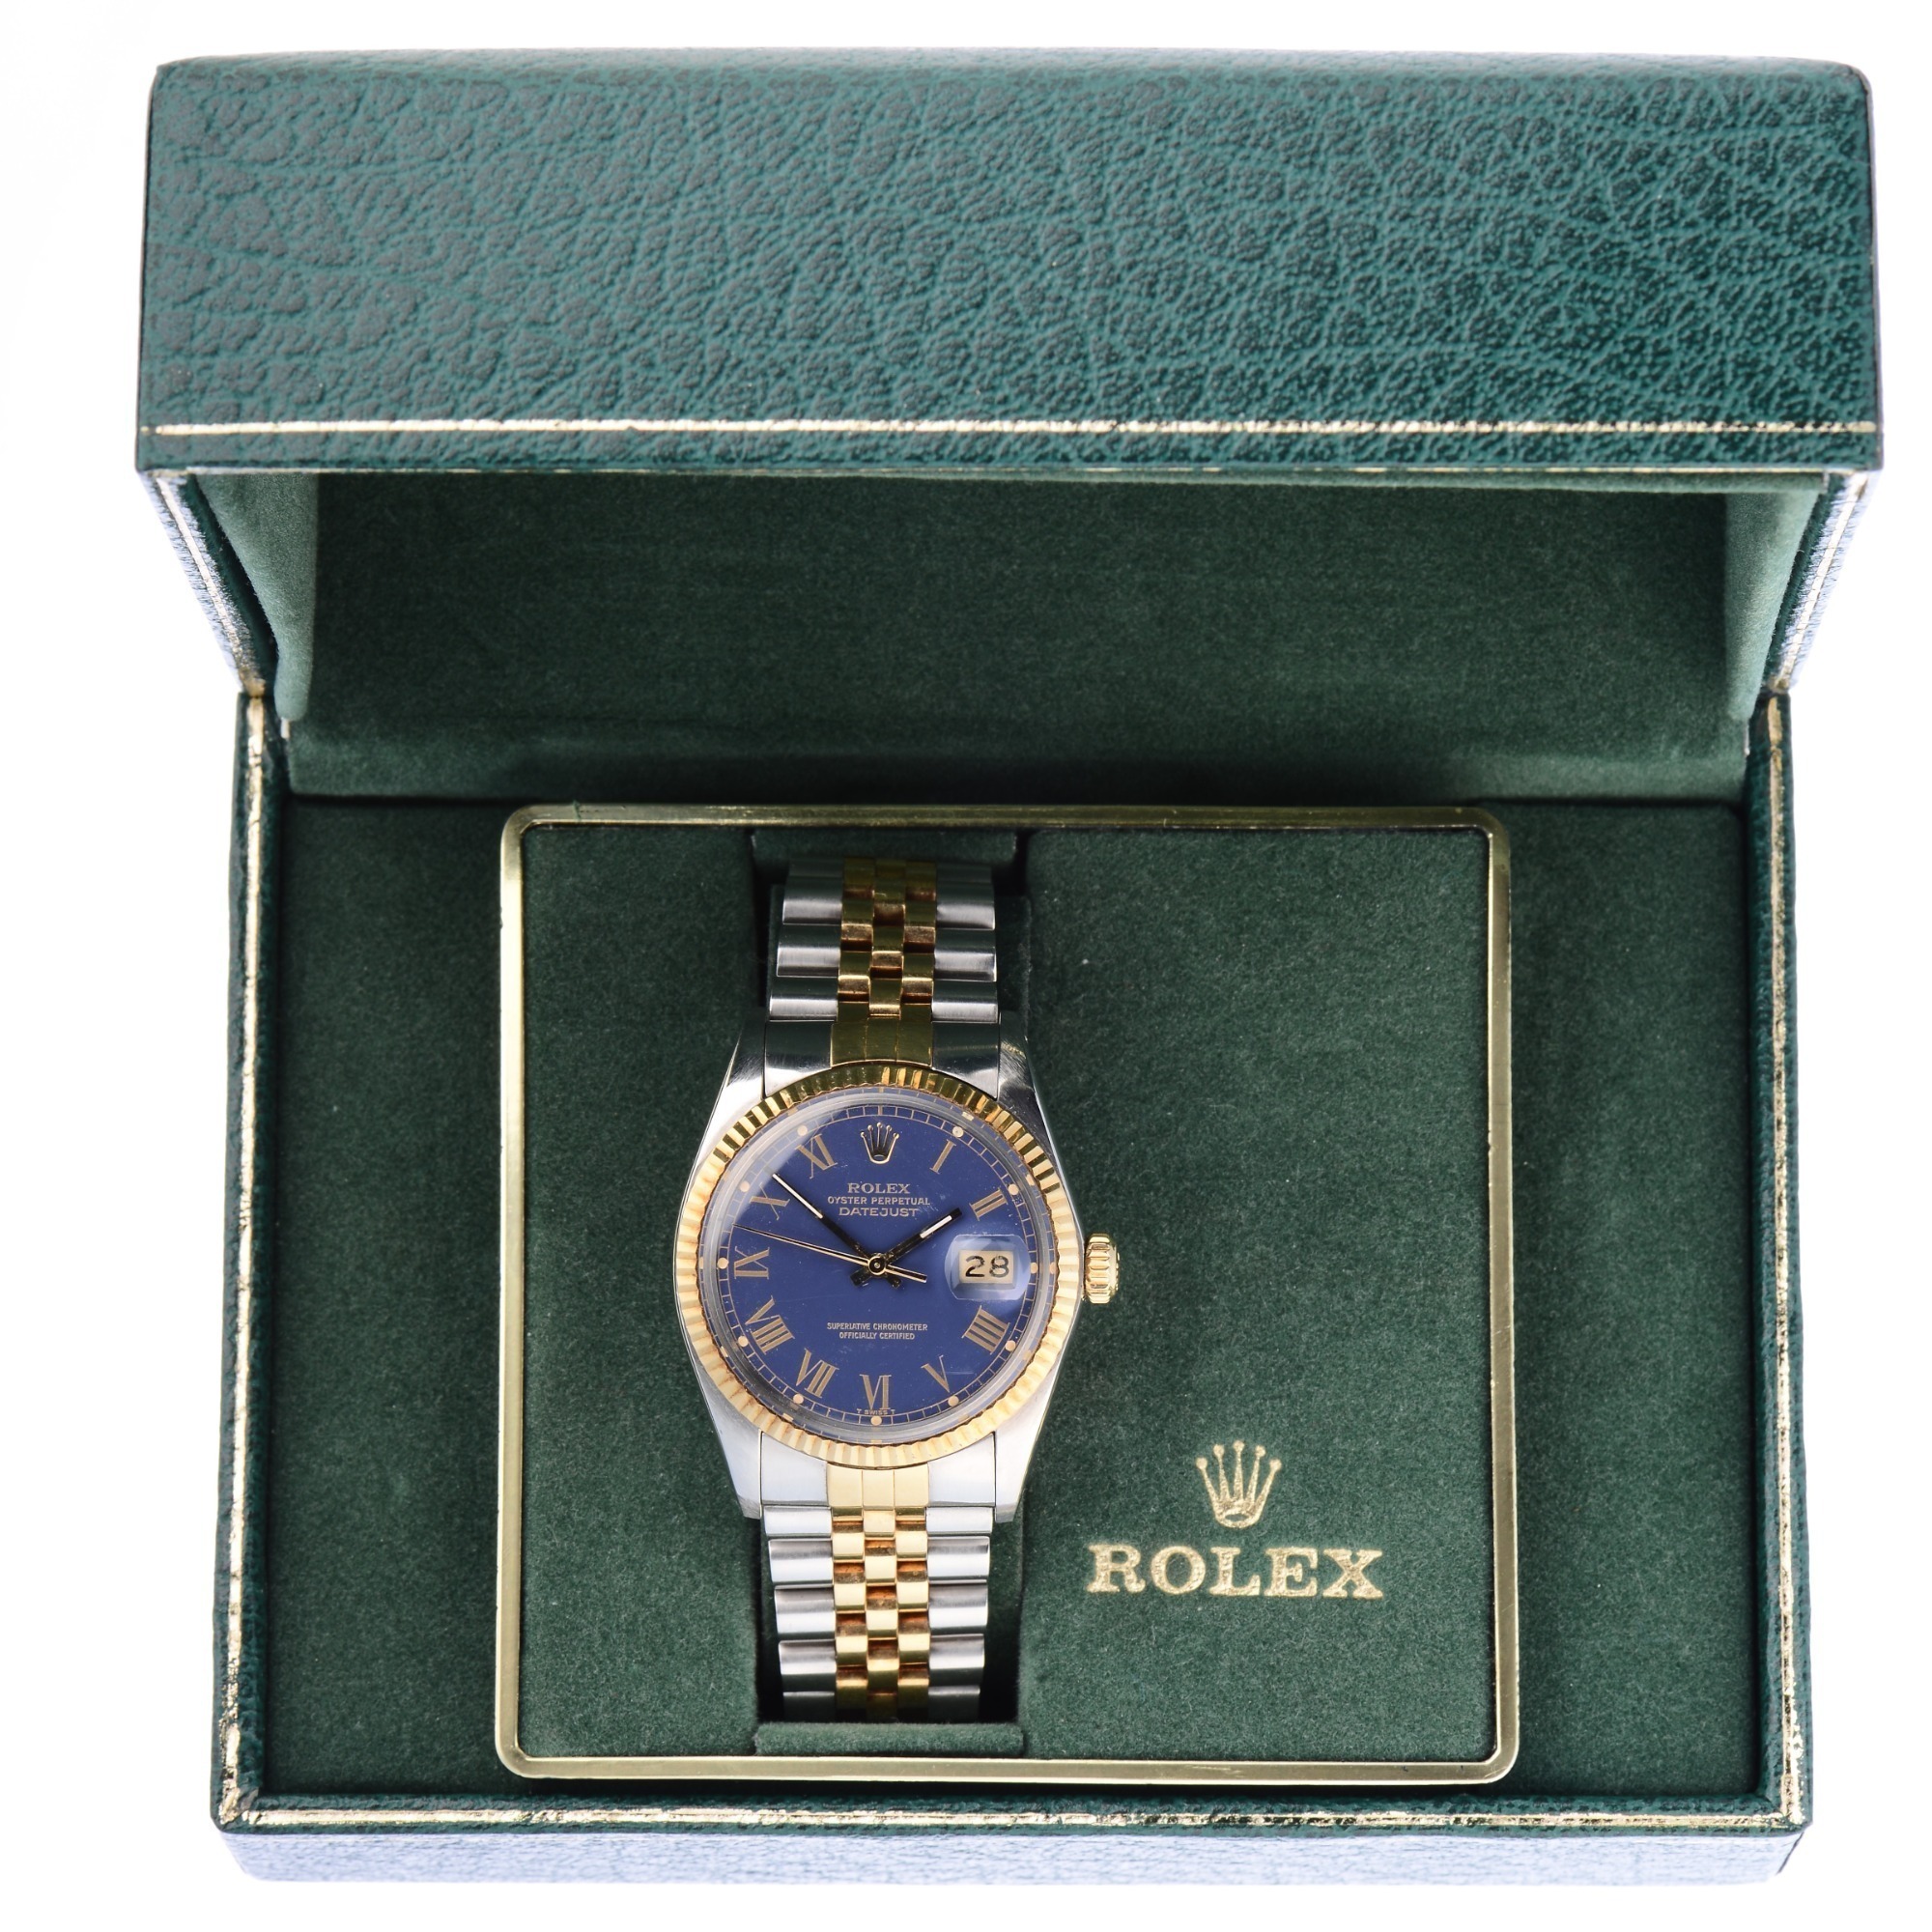 Rolex Buckley Dial Ref. 16013 Datejust Steel and Gold Wristwatch